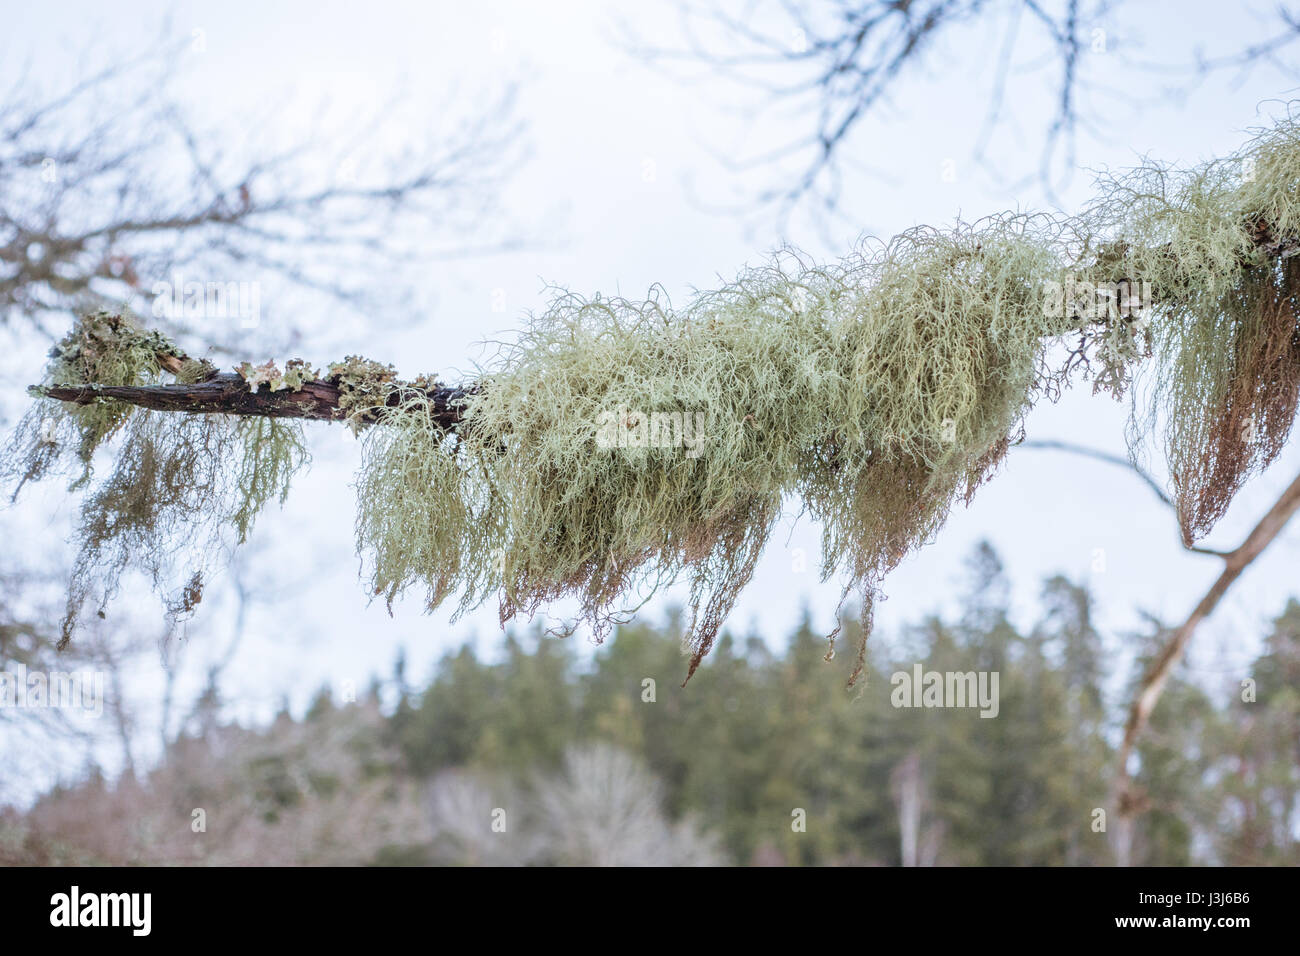 Fishbone beard lichen is sensitive to air pollution Stock Photo